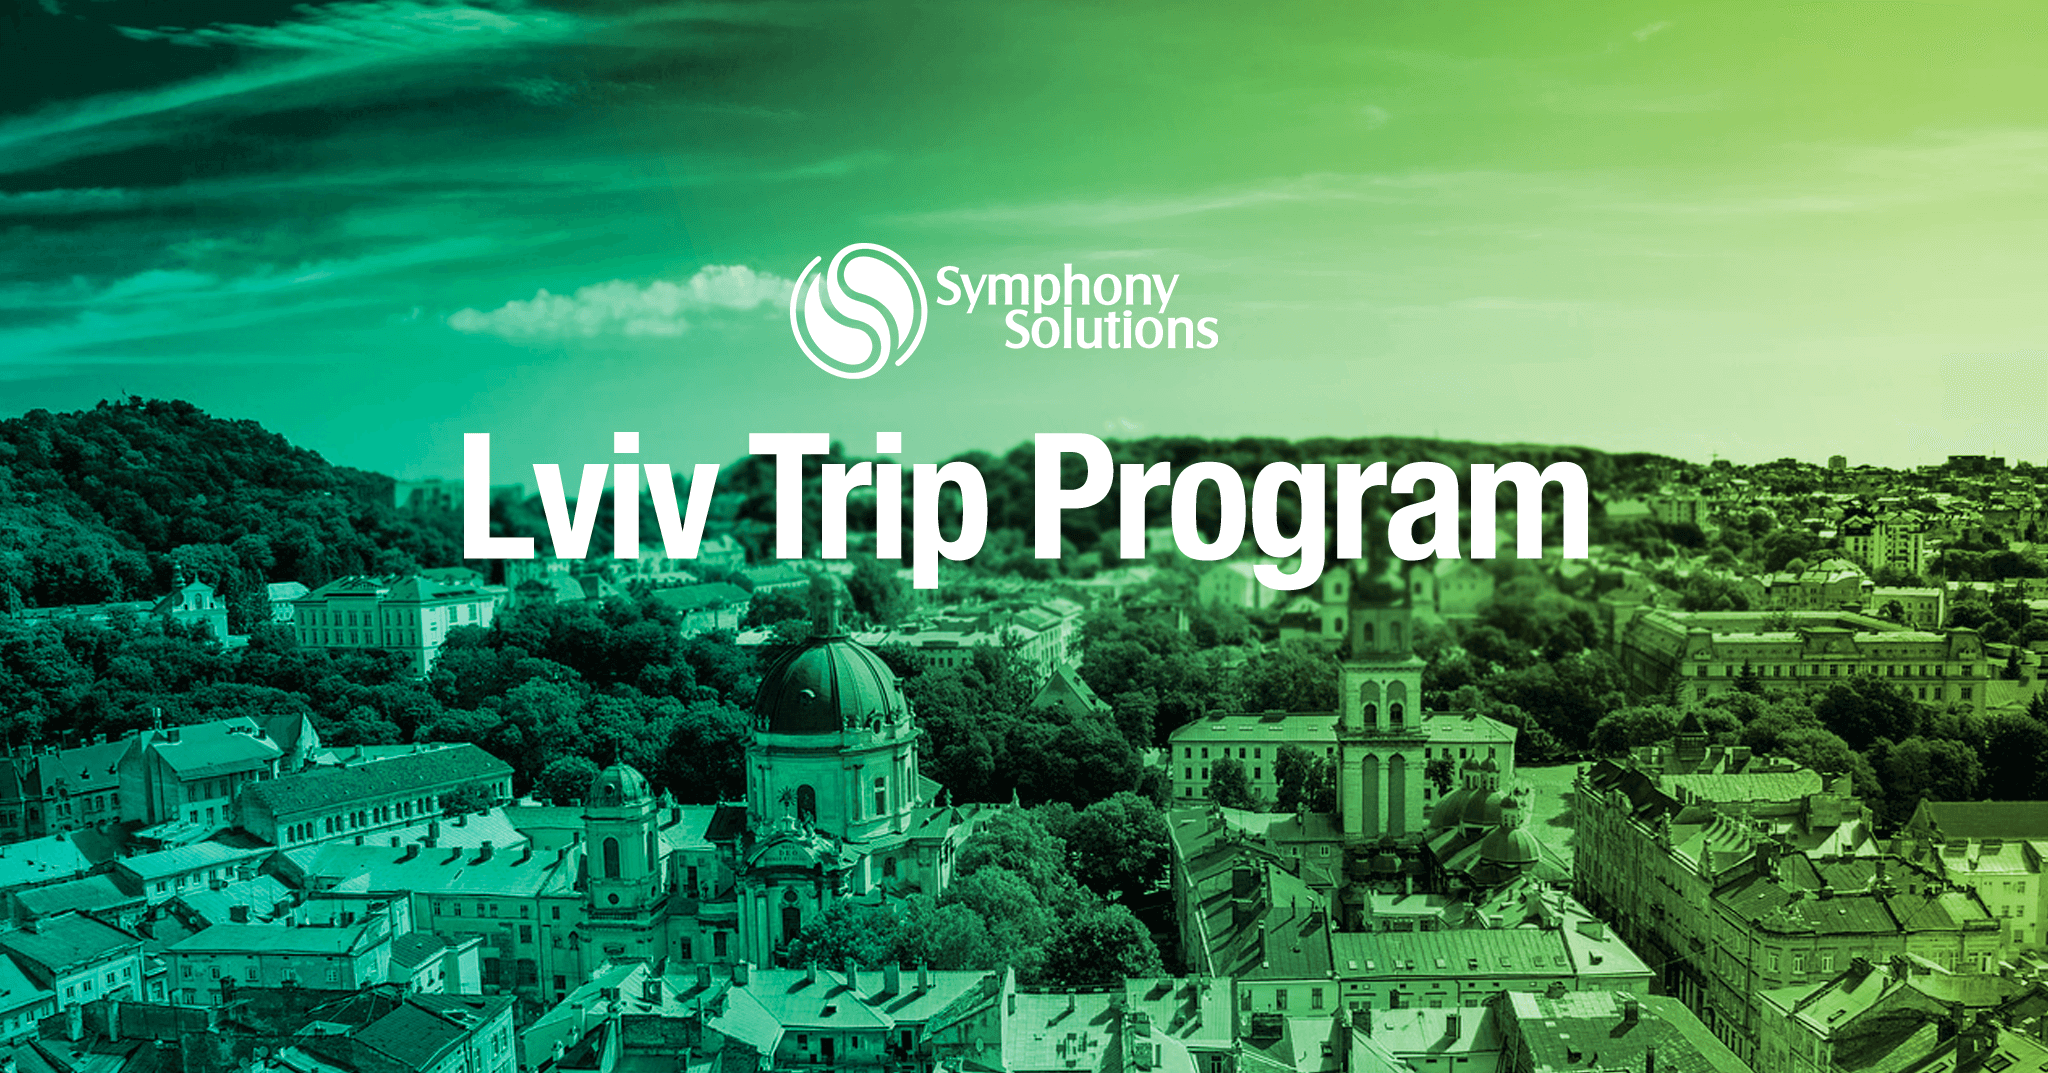 Lviv Trip Program